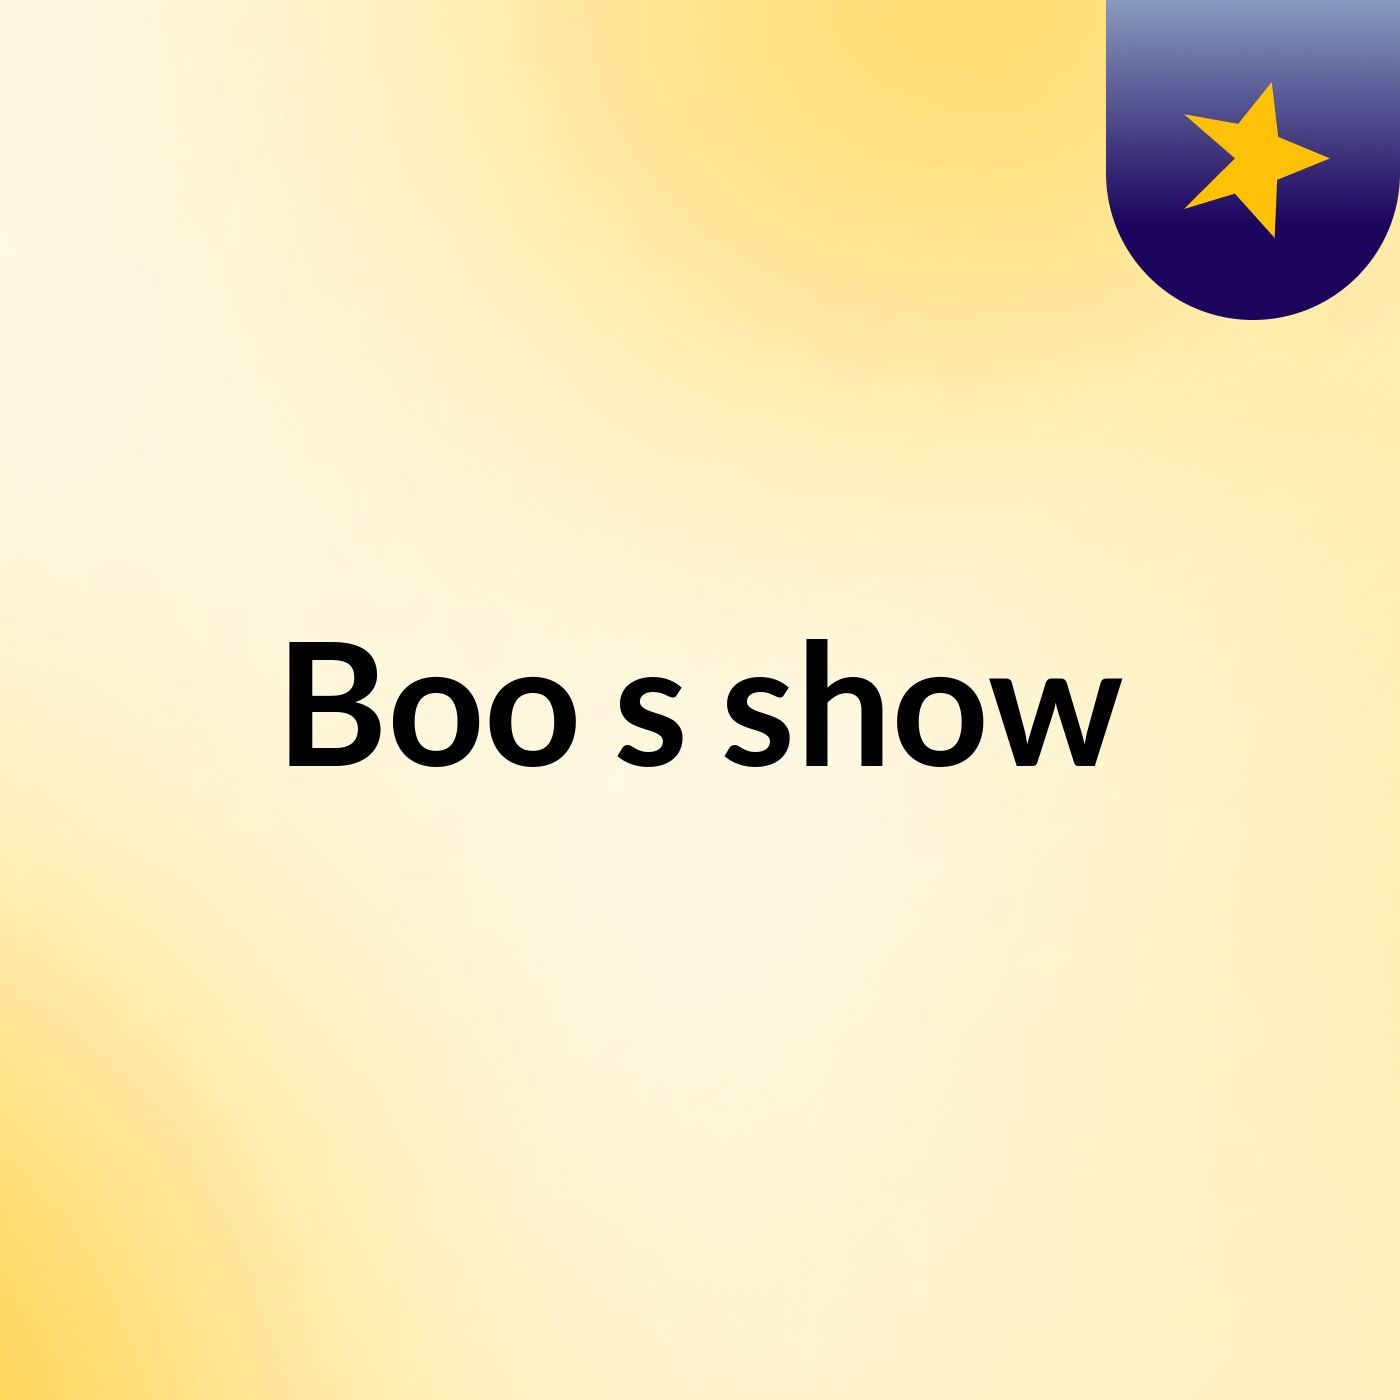 Boo's show